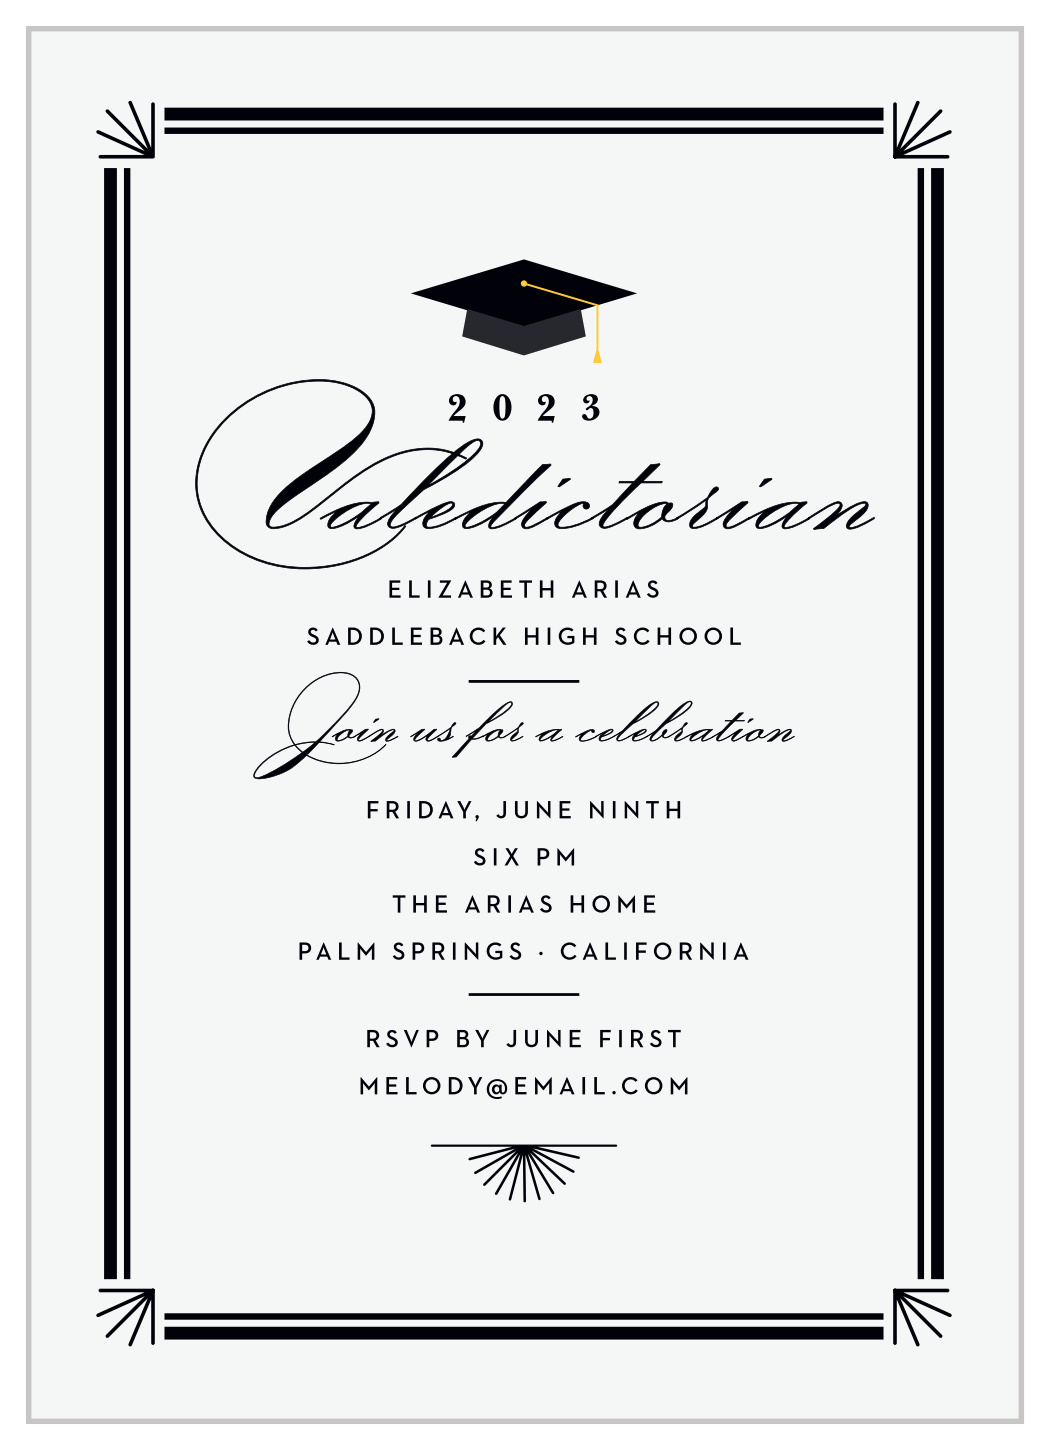 blank graduation party invitations